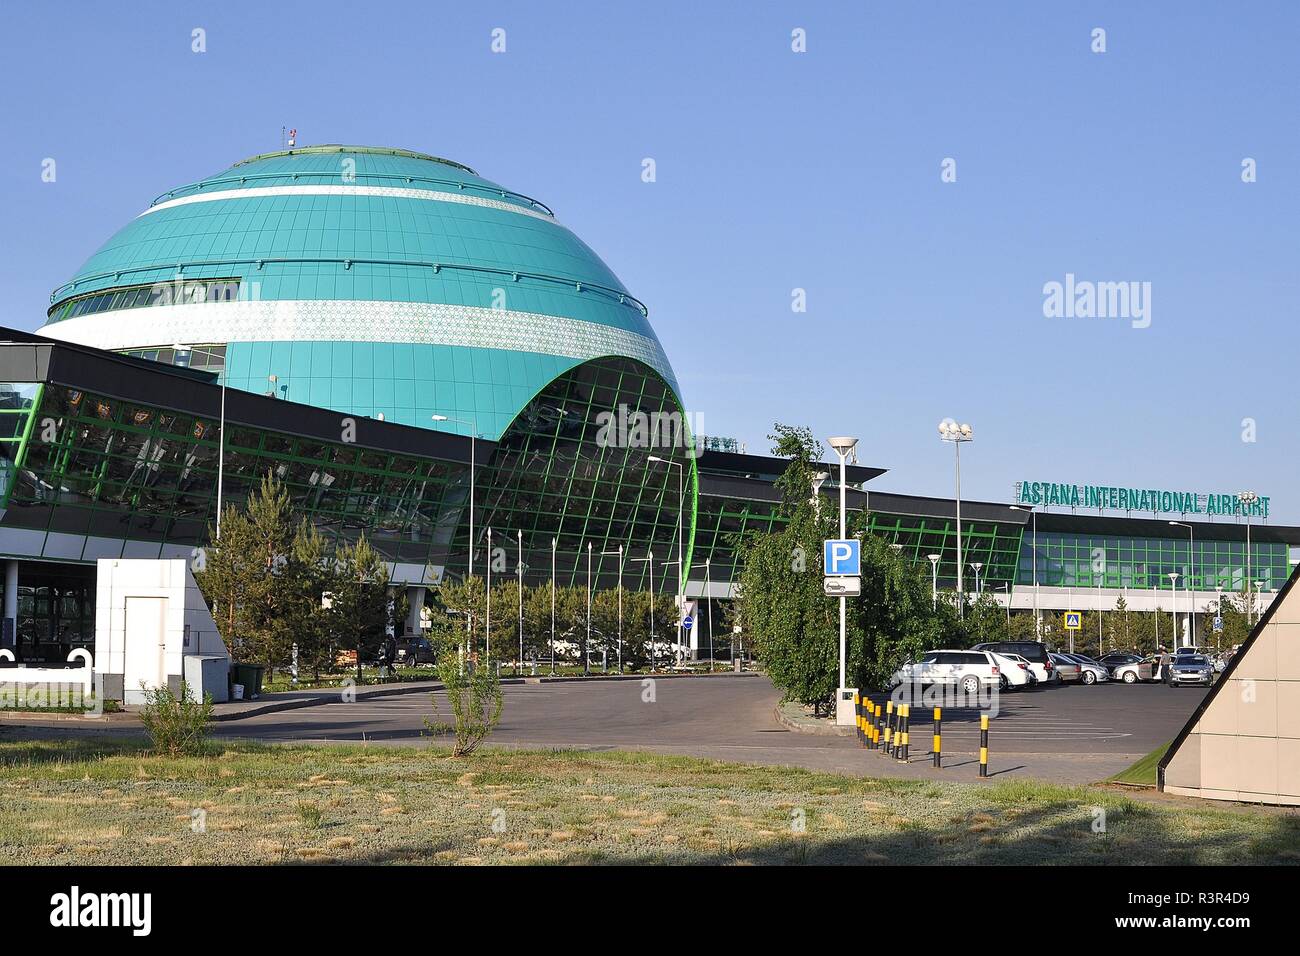 ISLAMIC STYLE ARCHITECTURE ON TERMINAL BUILDING AT ASTANA INTERNATIONAL AIRPORT, KAZAKHSTAN. Stock Photo